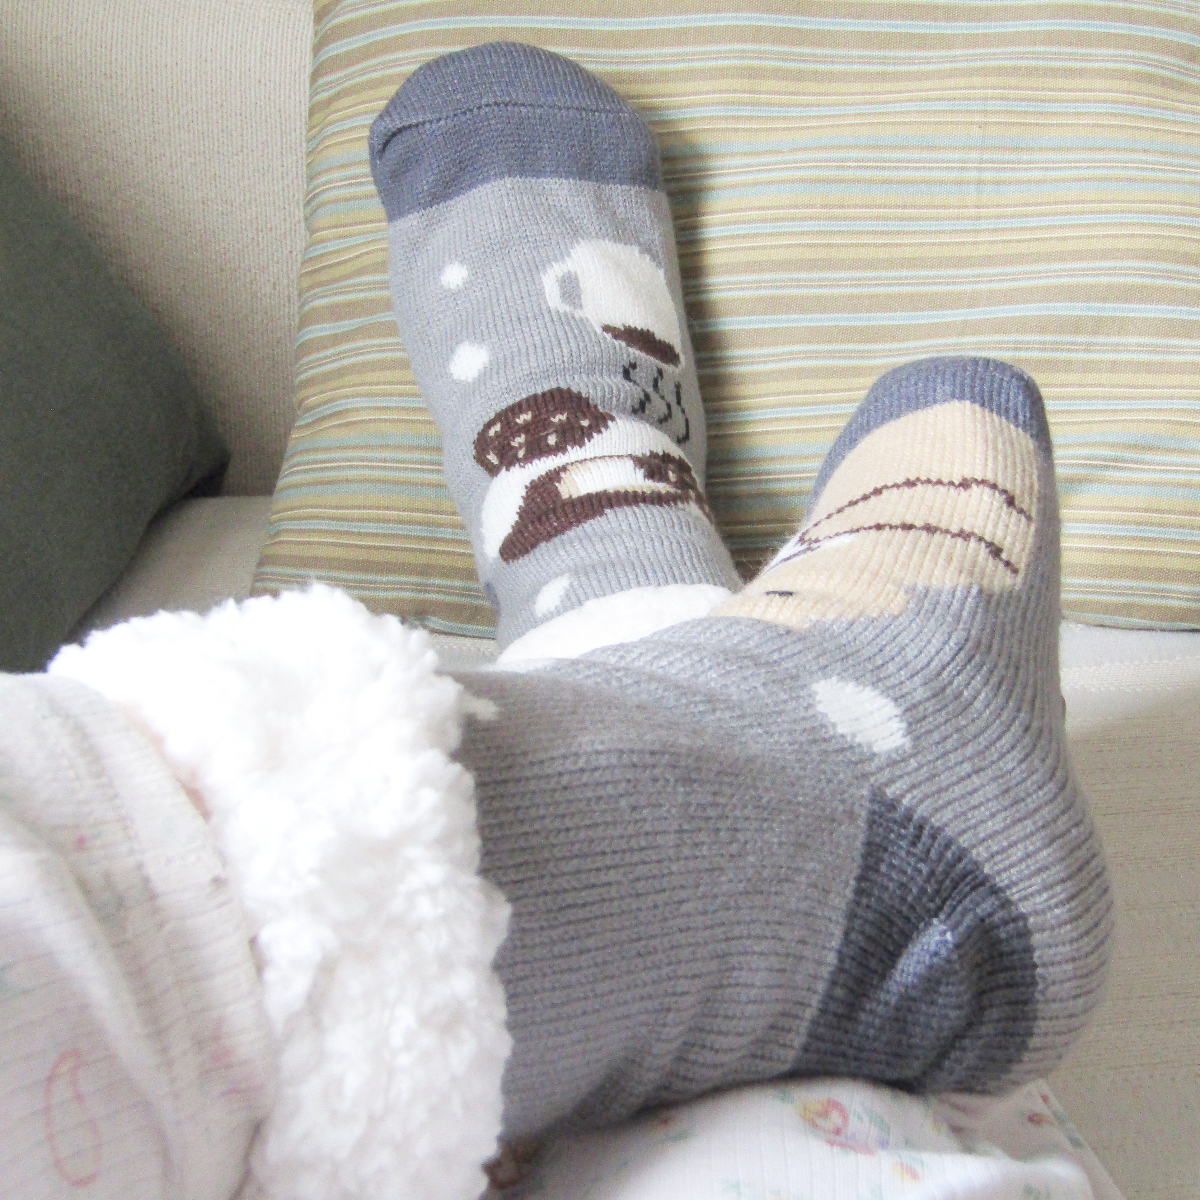 Review of Sherpa Theme Slipper Socks